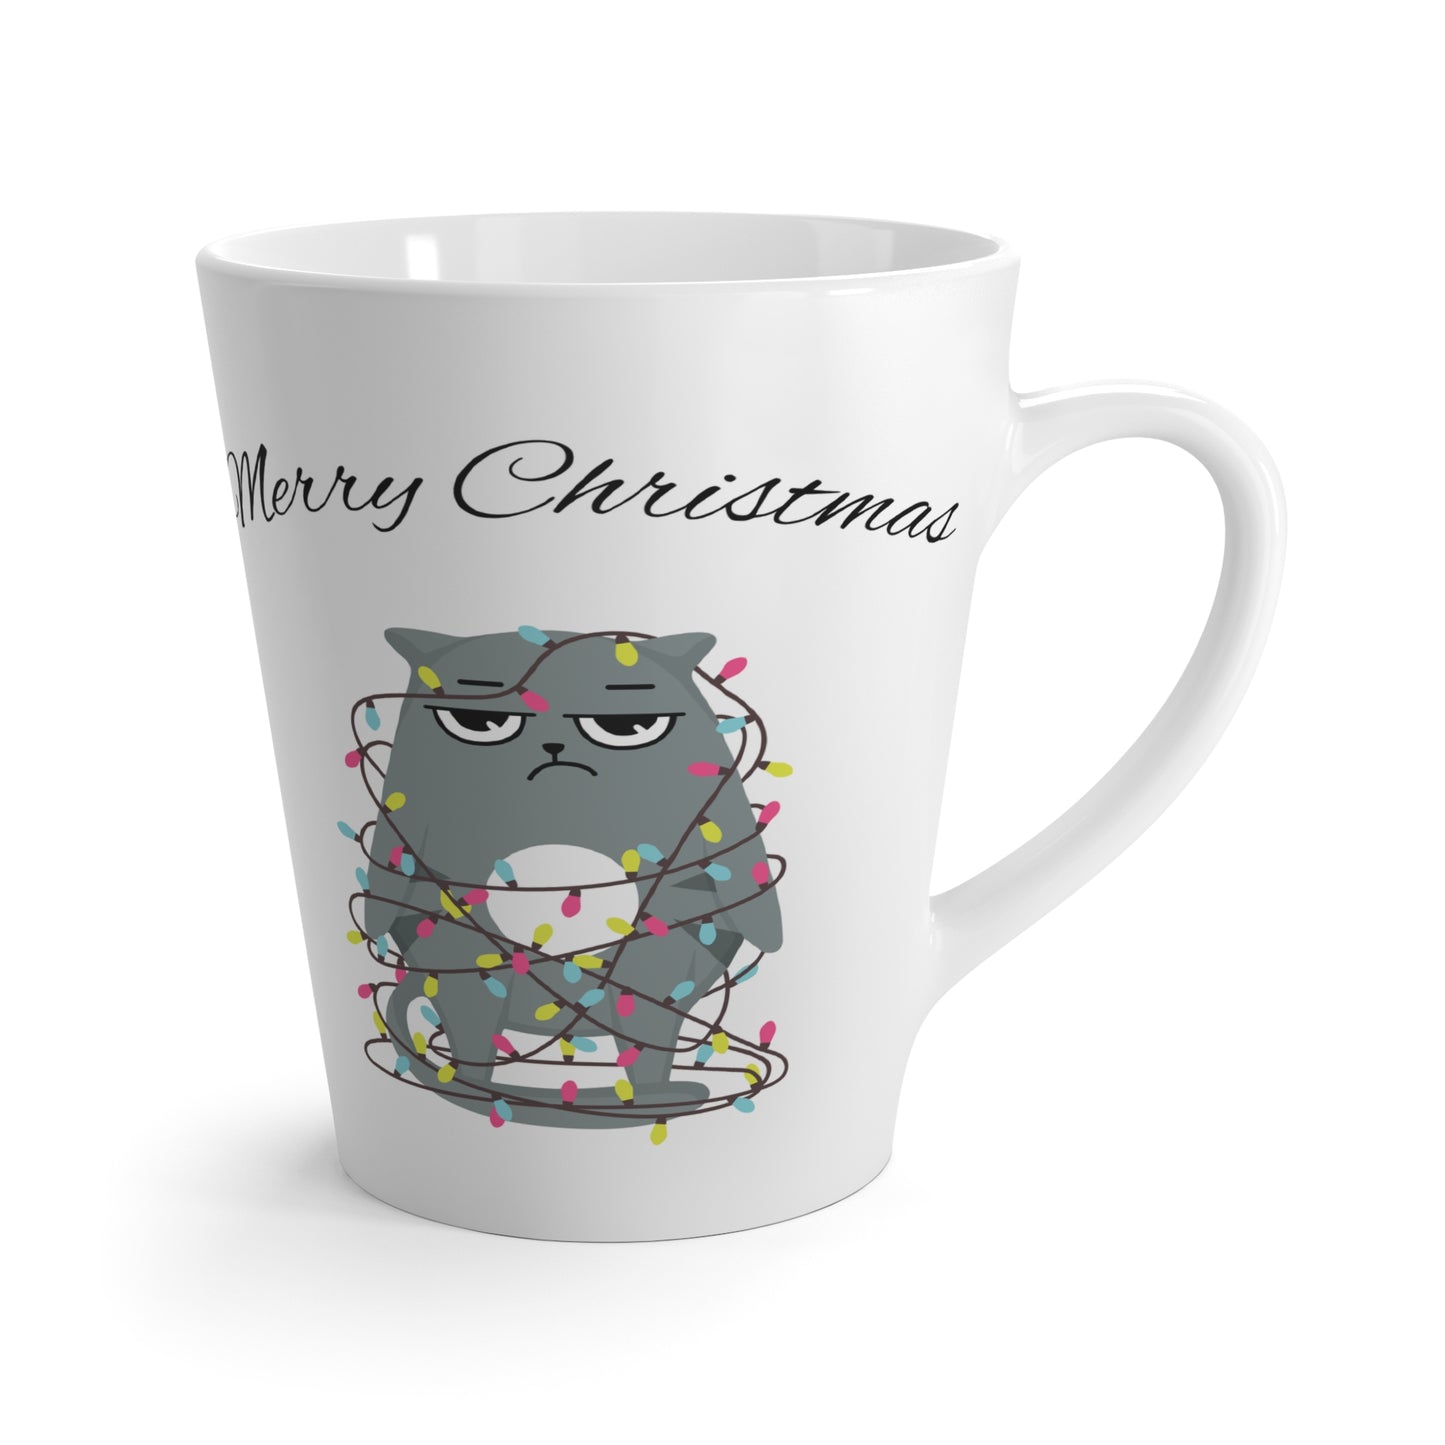 Merry Christmas Printed Latte Mug, 12oz